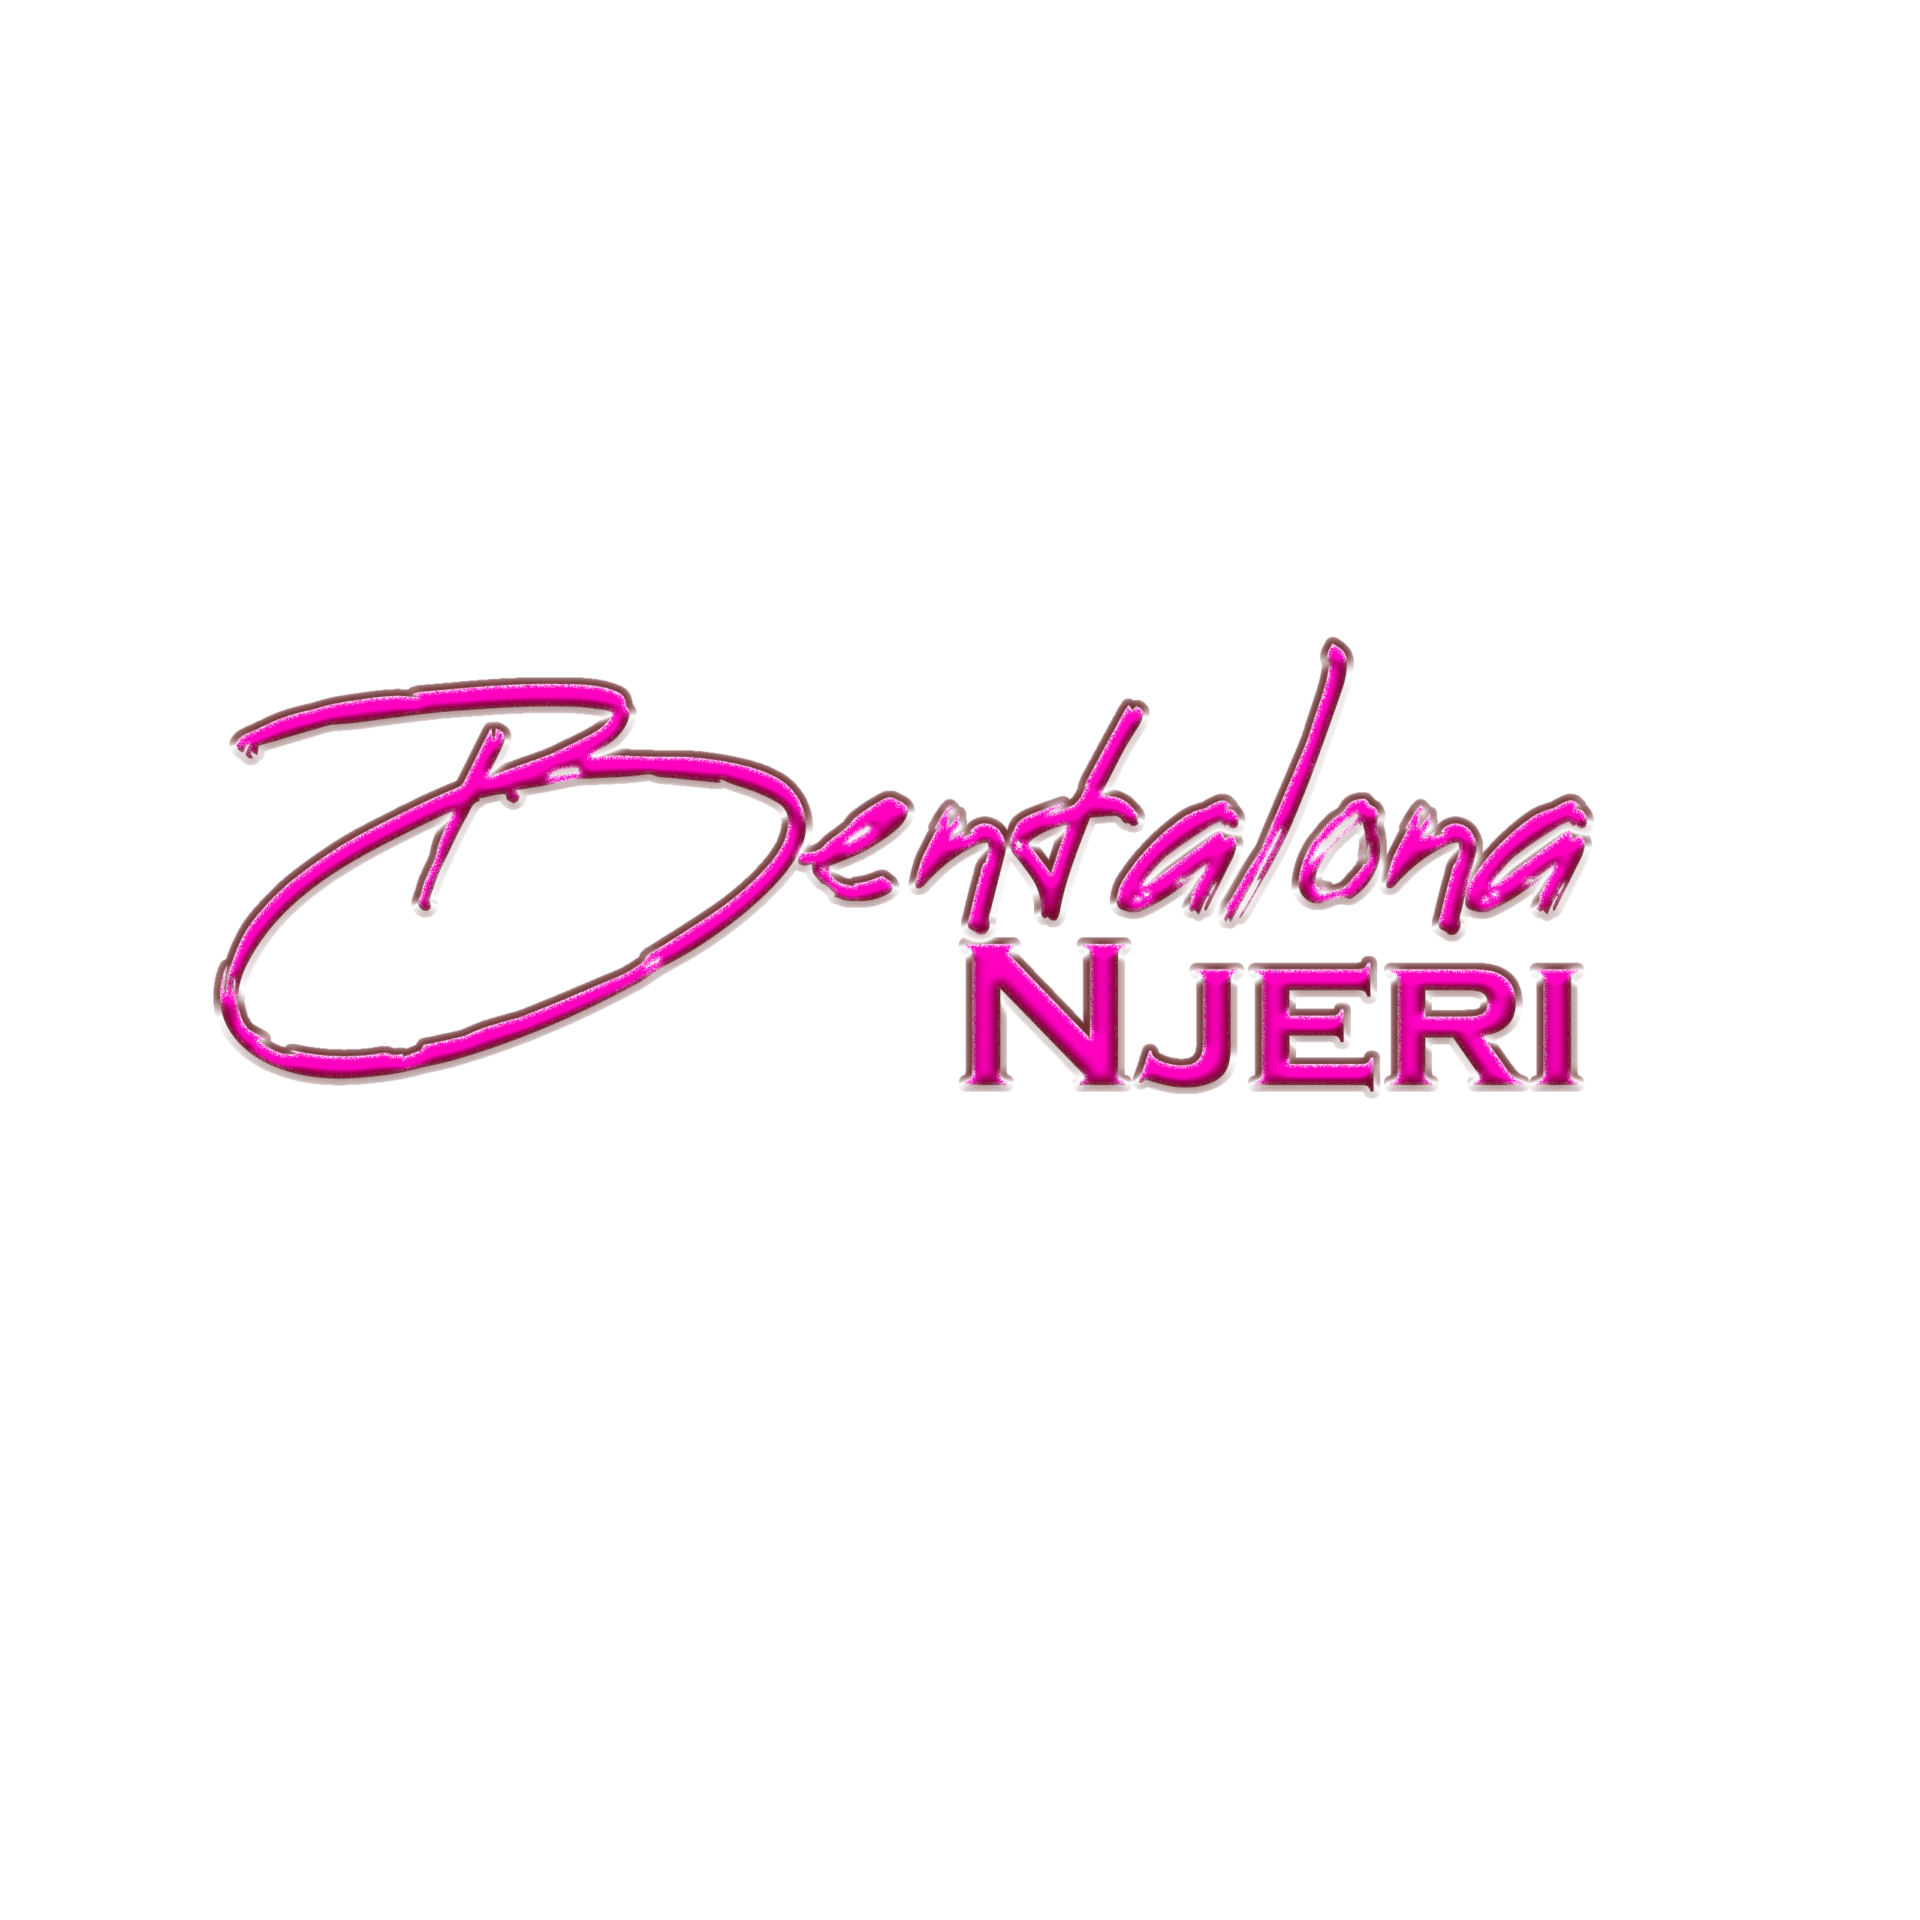 Bentalona Njeri logo